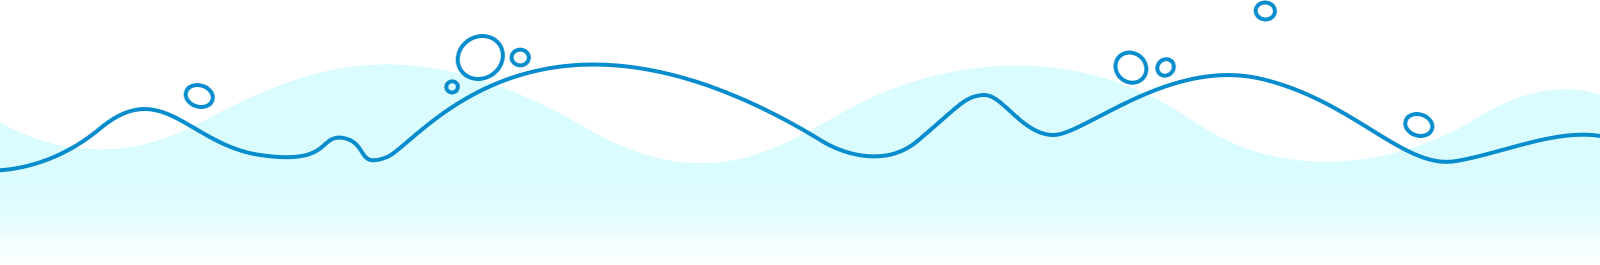 Waves - Swimming (1600x265)